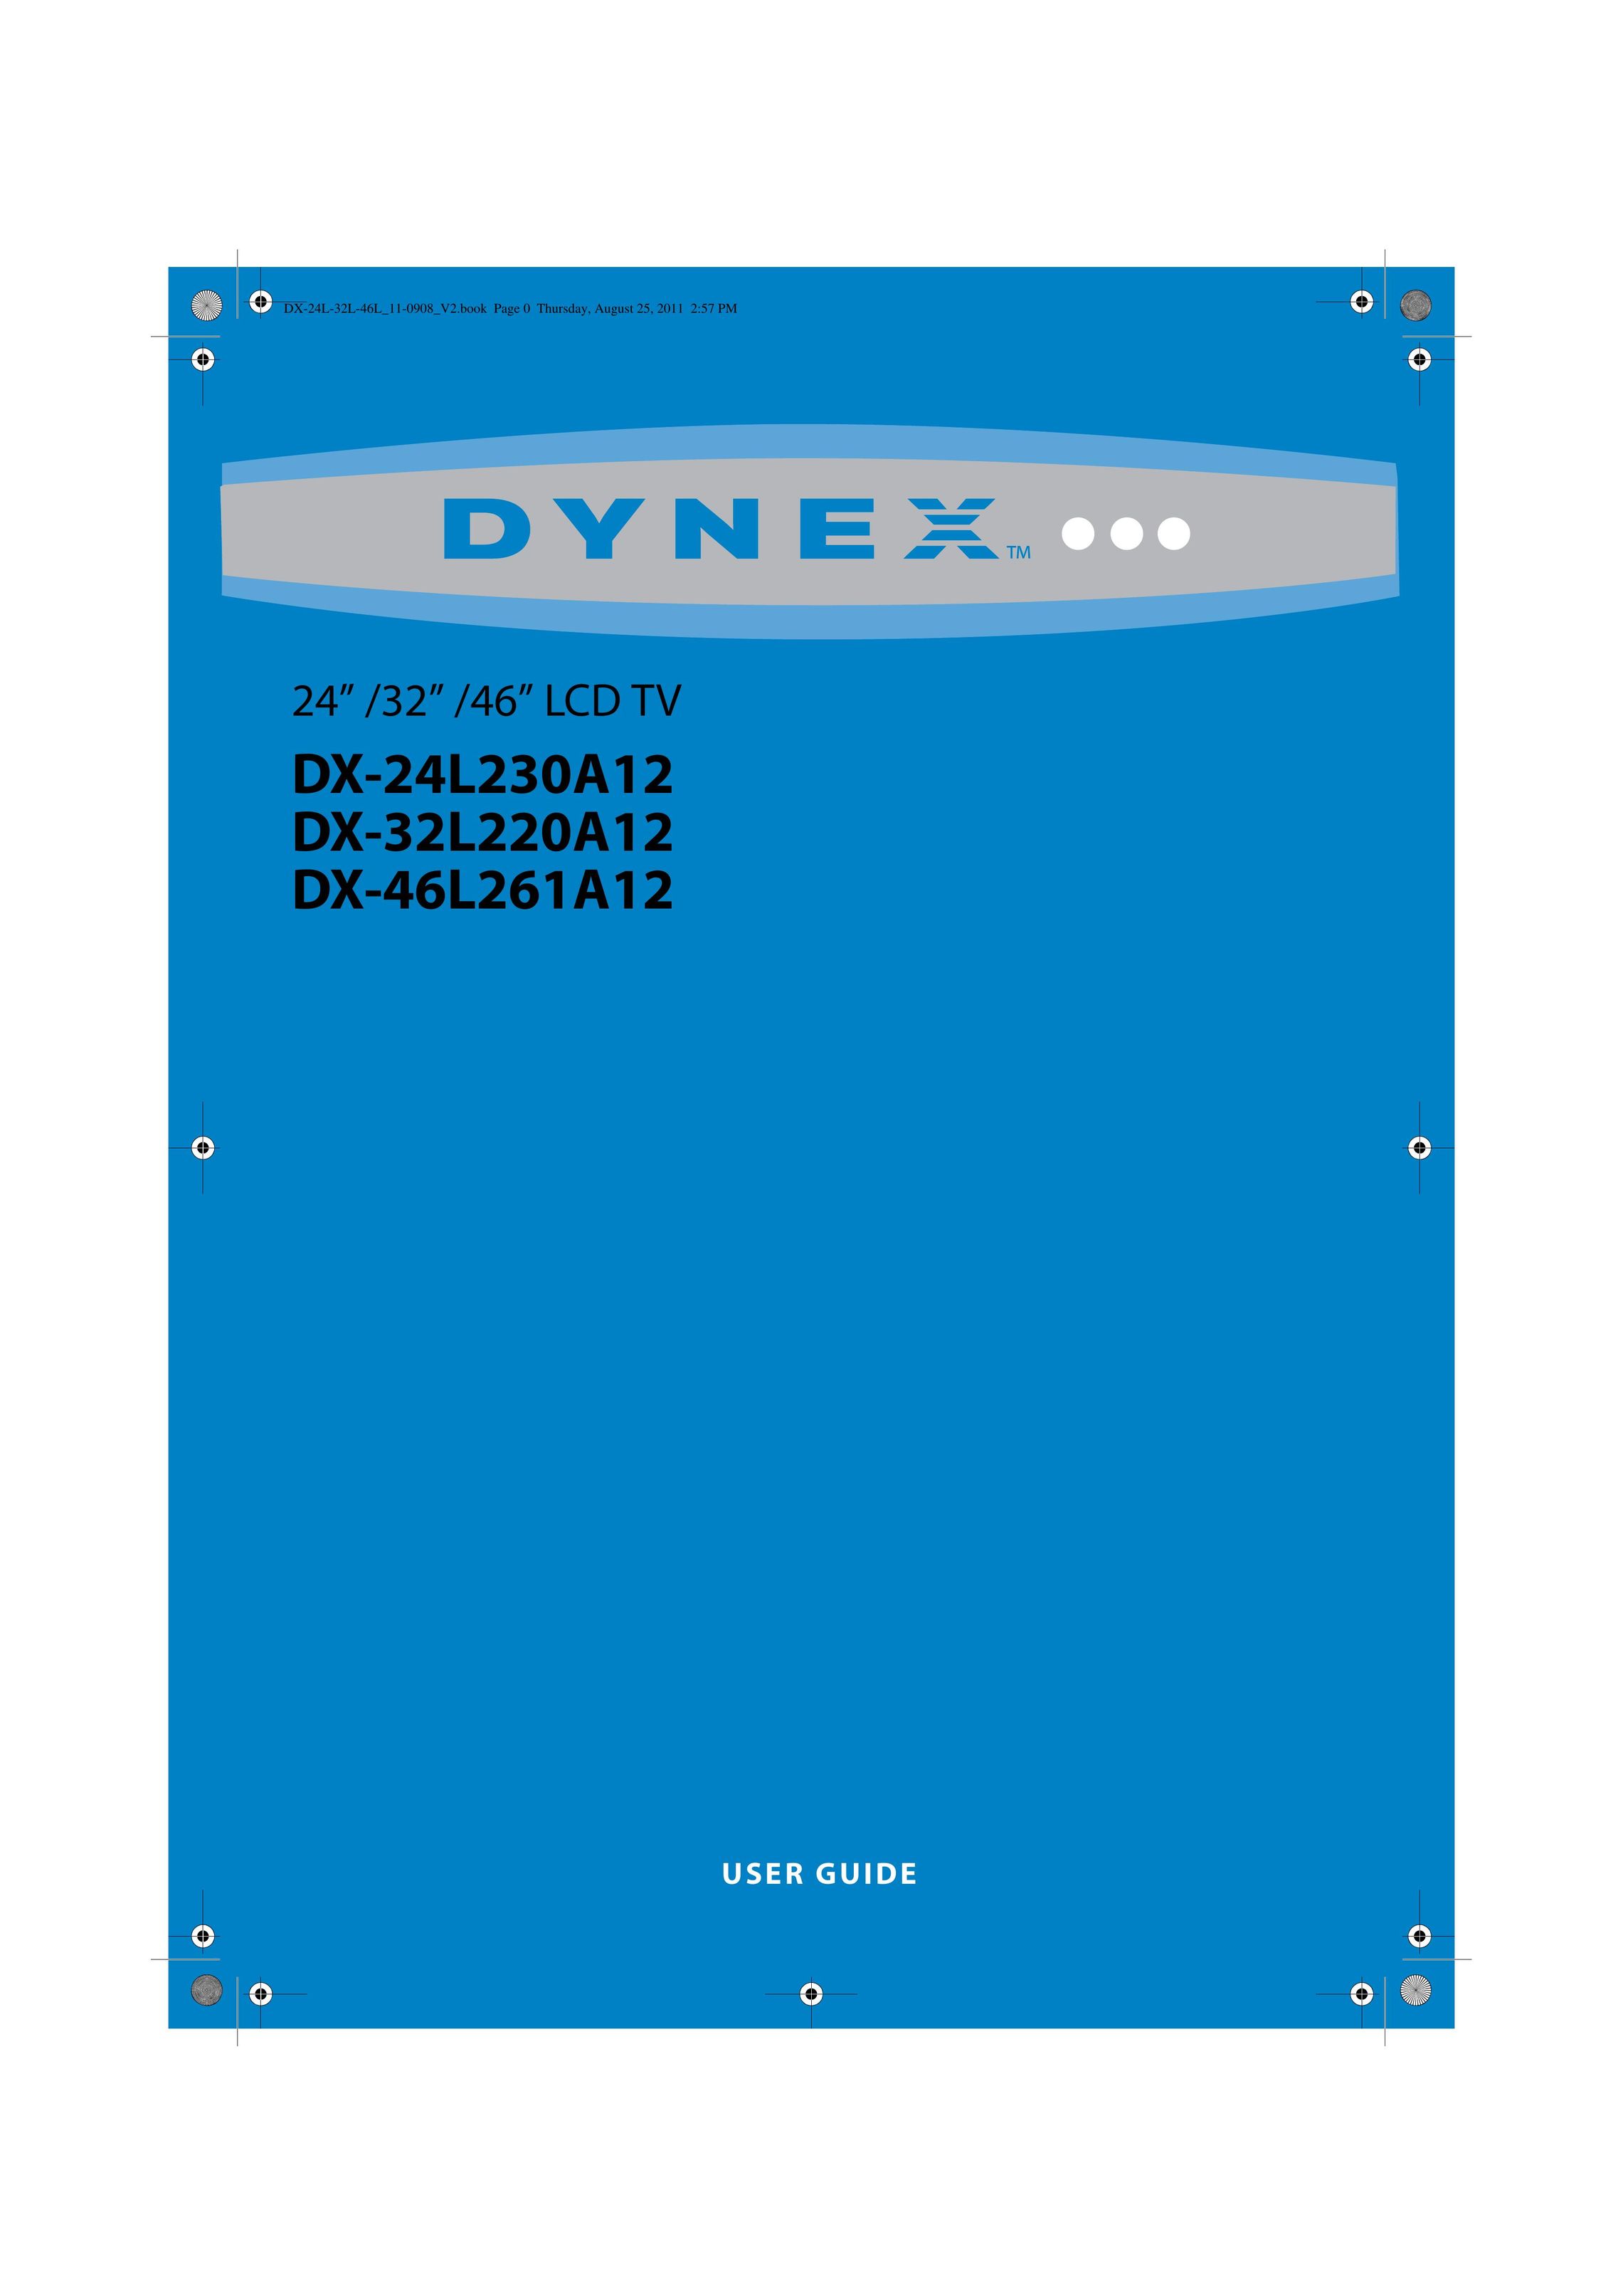 Dynex DX-32L220A12 Flat Panel Television User Manual